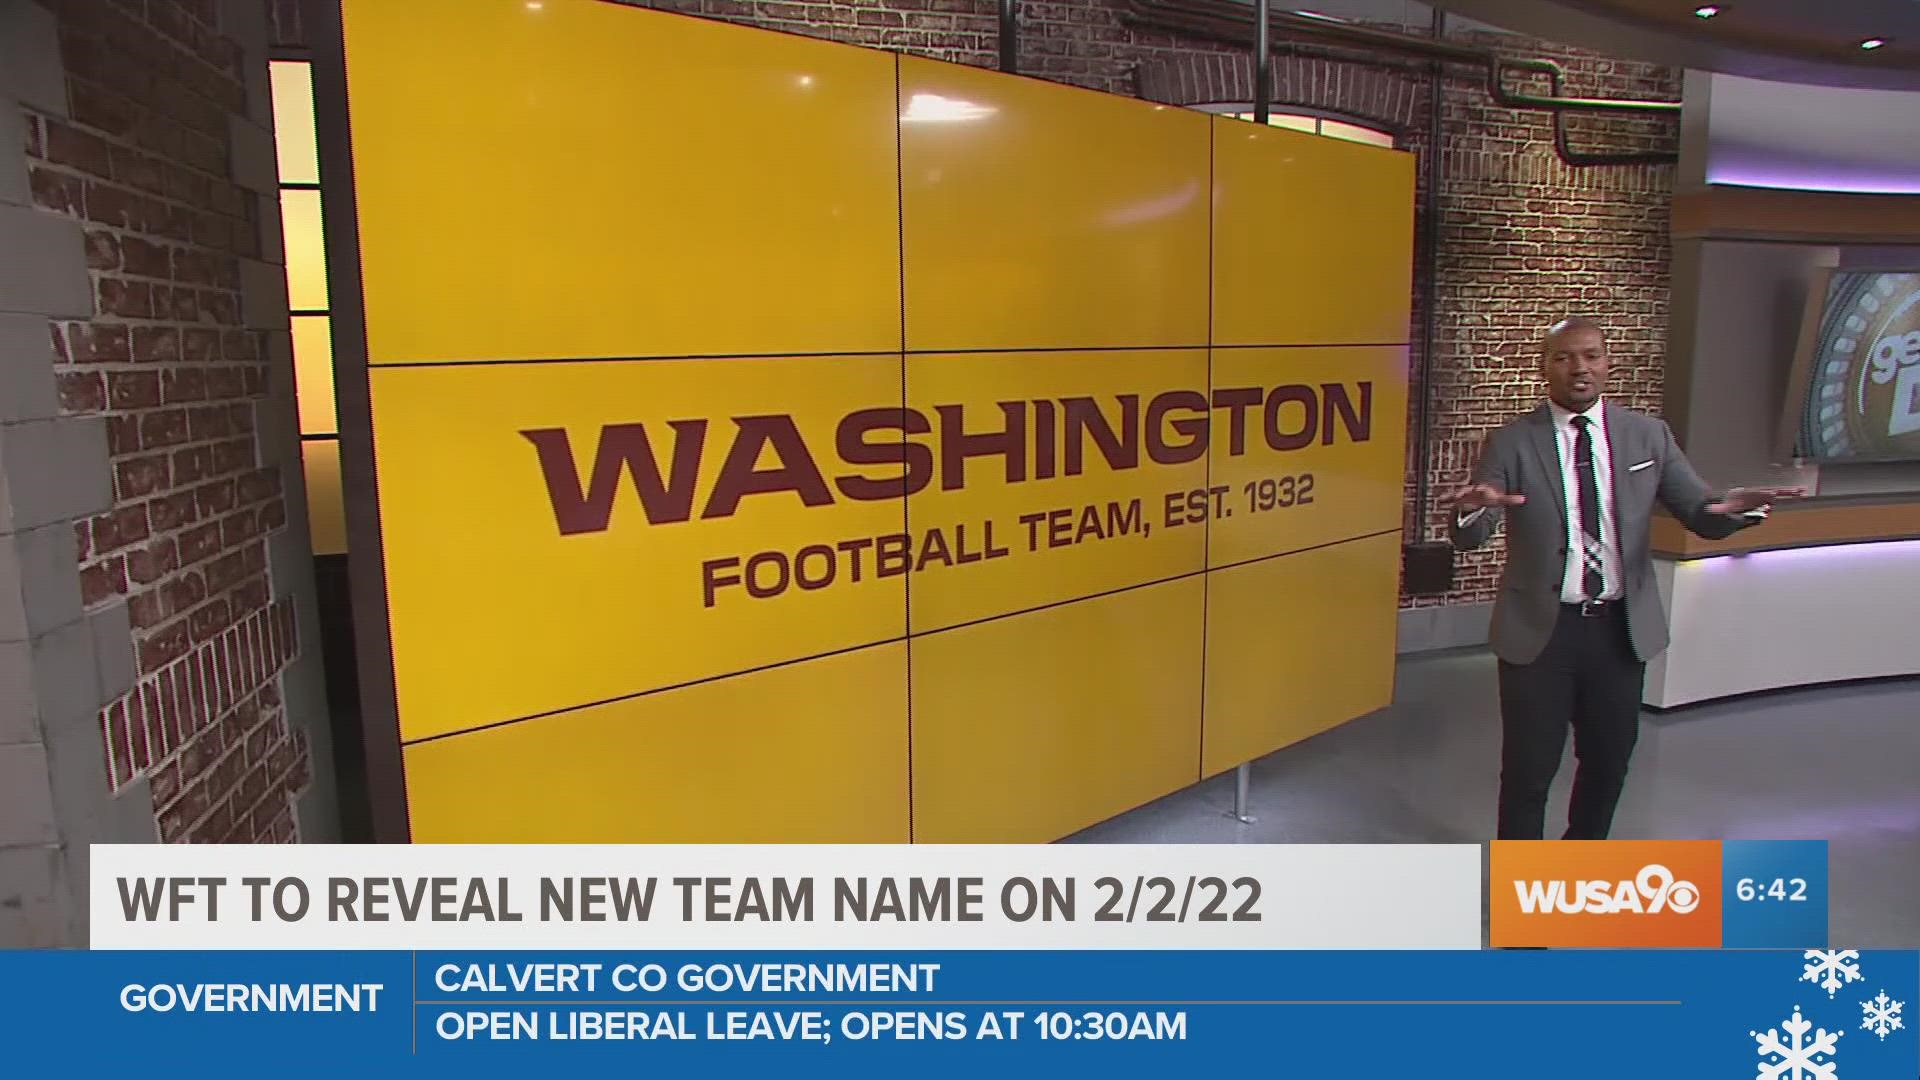 Timeline of Washington Football Team name change